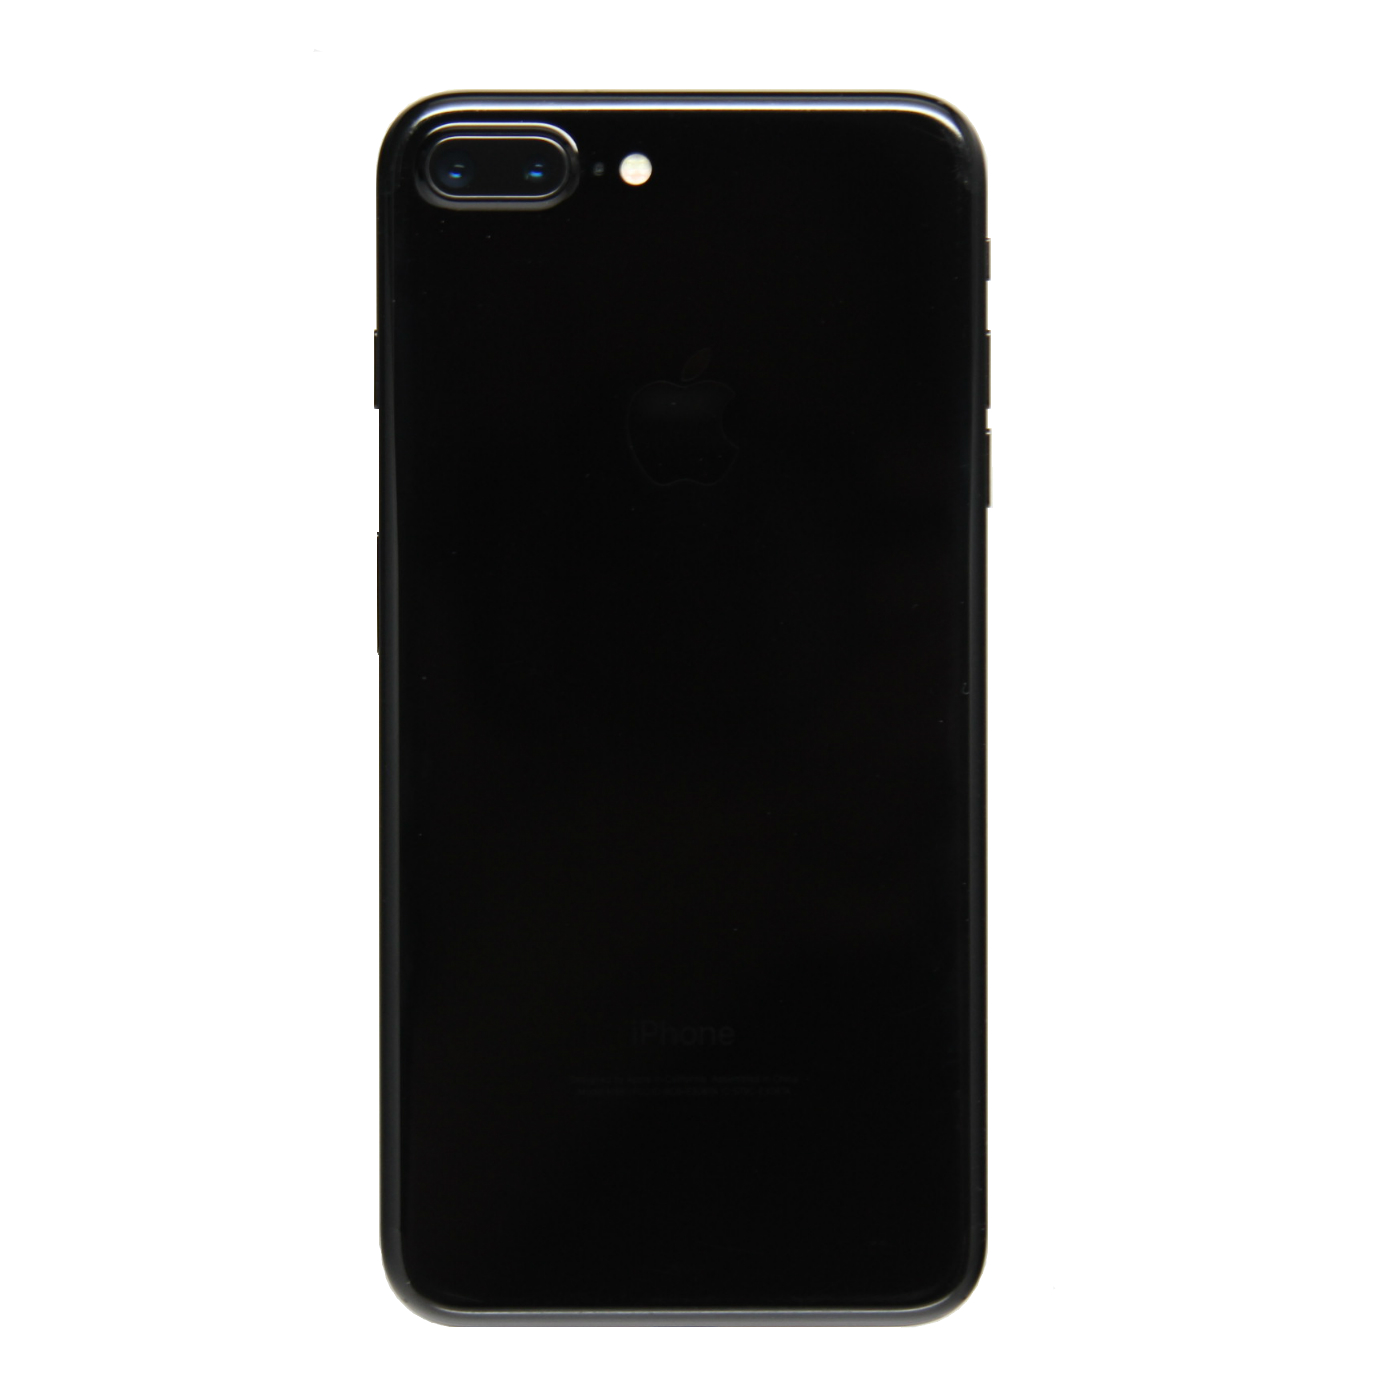 Apple iPhone 7 Plus 128GB Unlocked GSM 4G LTE Quad-Core Smartphone w/ Dual 12MP Camera - Jet Black - image 2 of 5